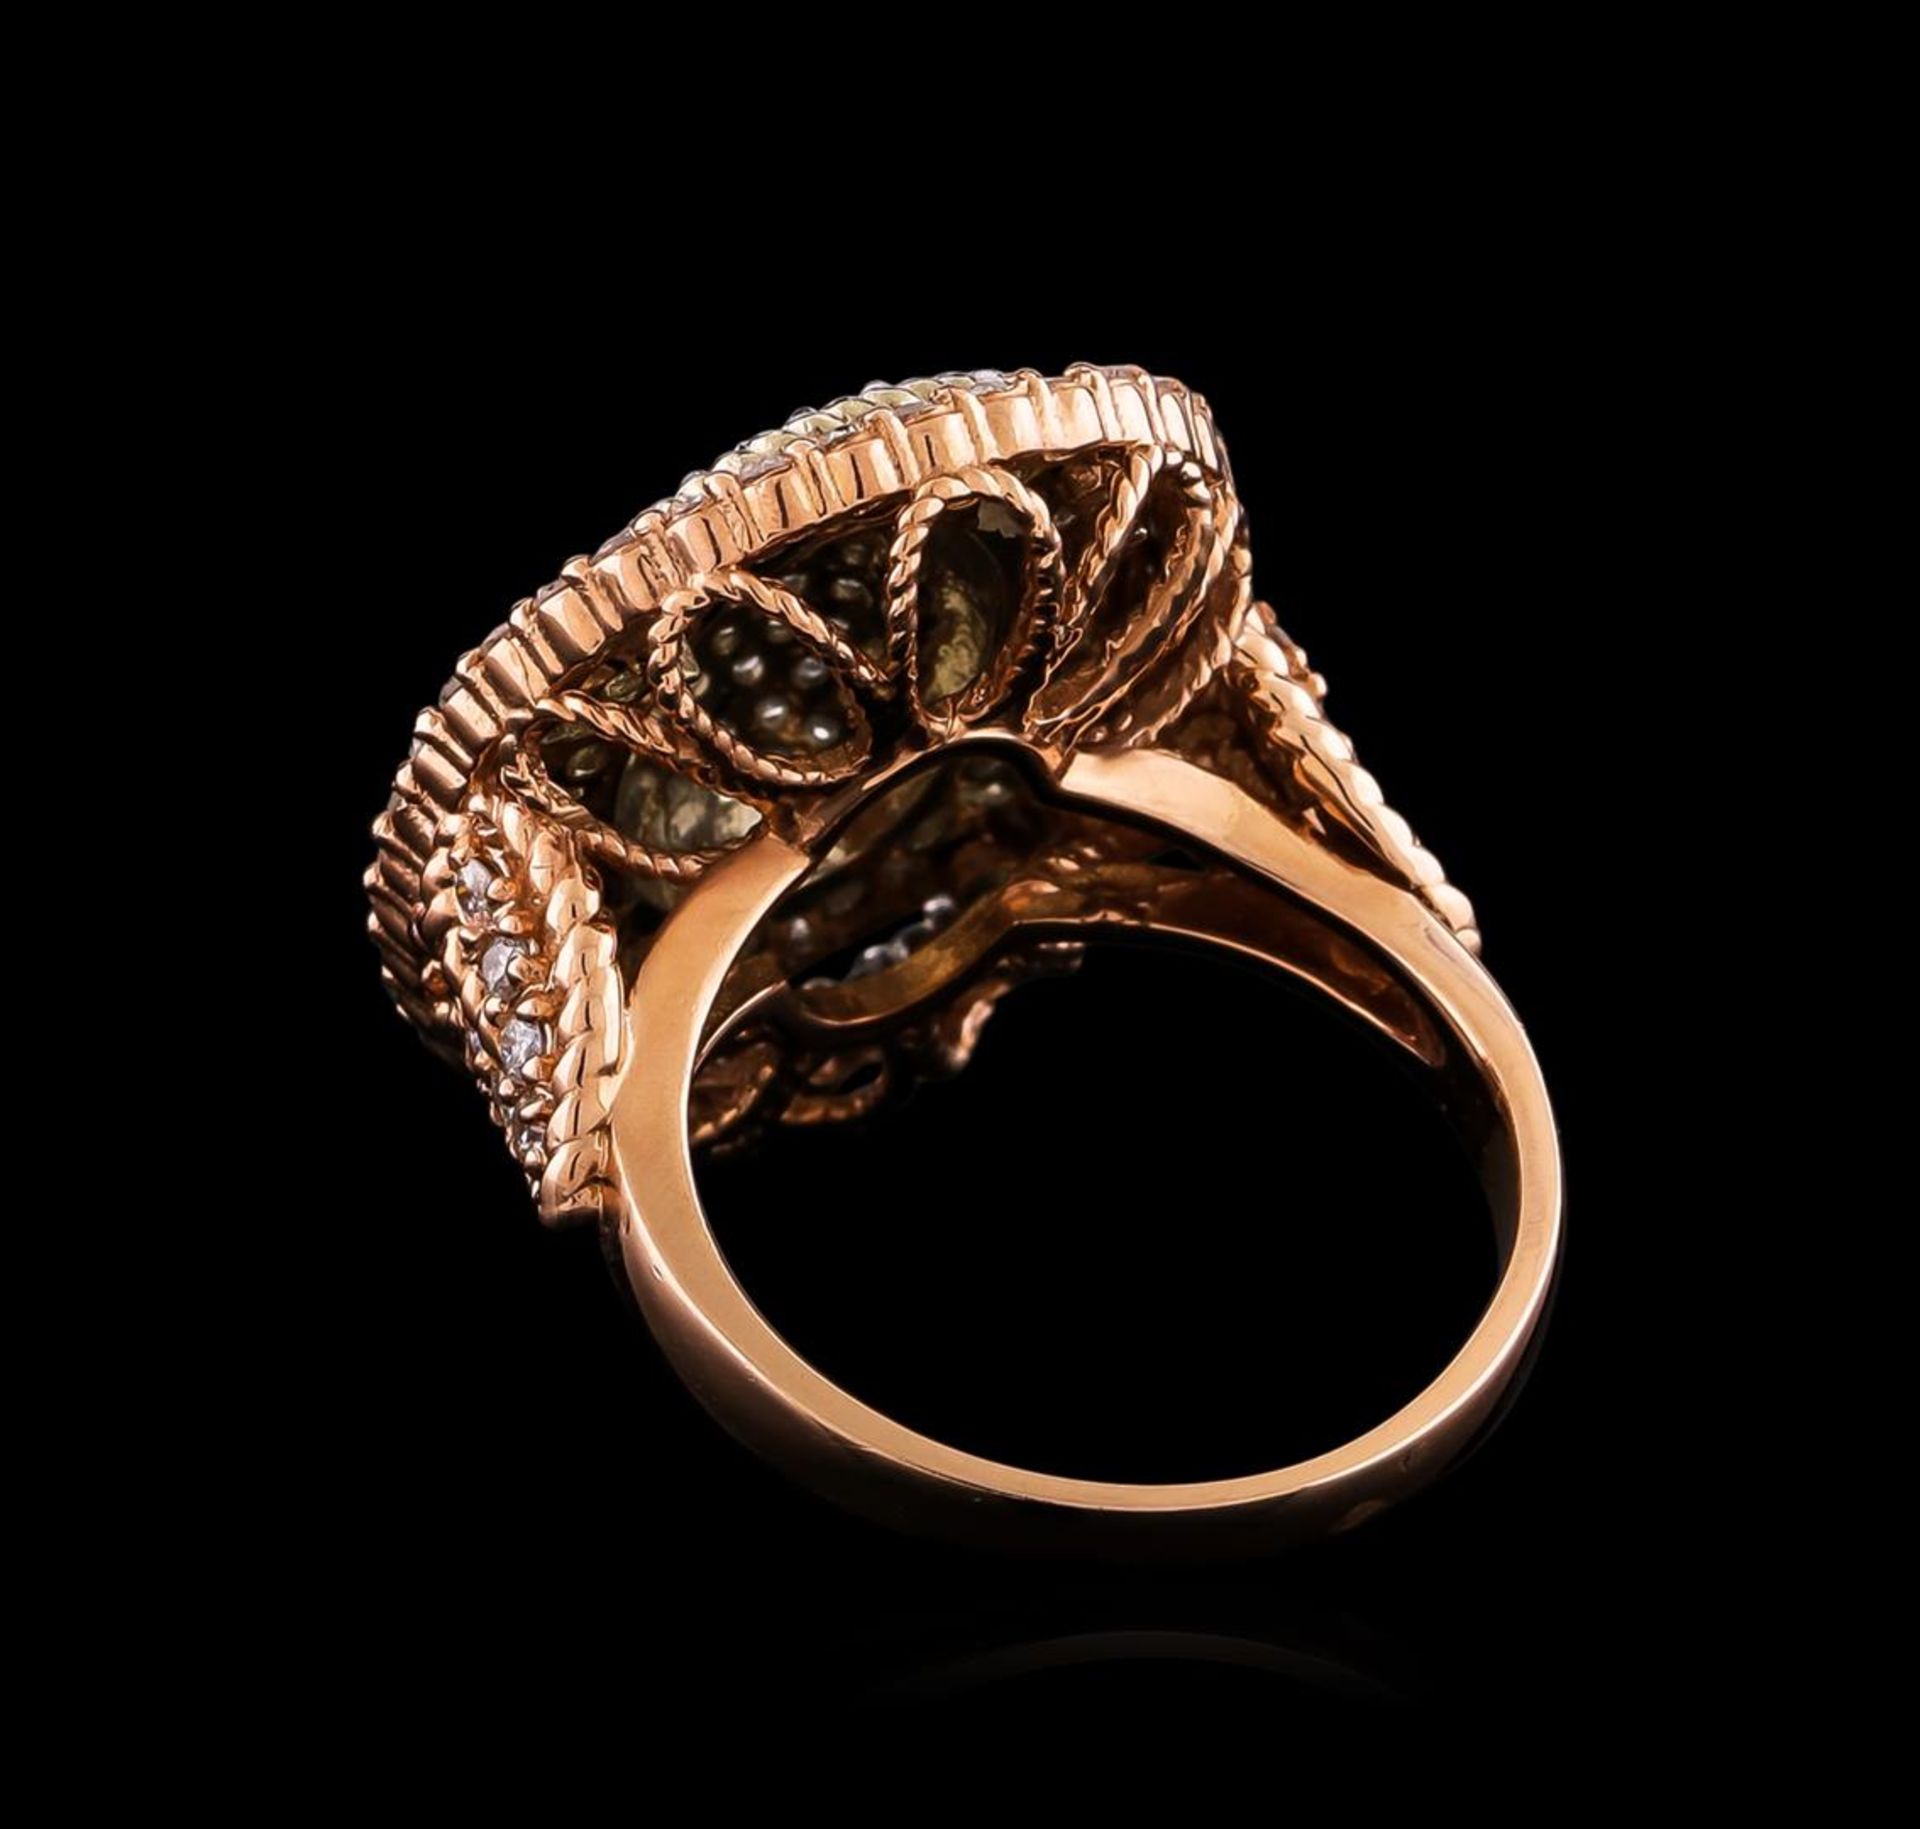 14KT Rose Gold 1.43 ctw Diamond Ring - Image 3 of 5